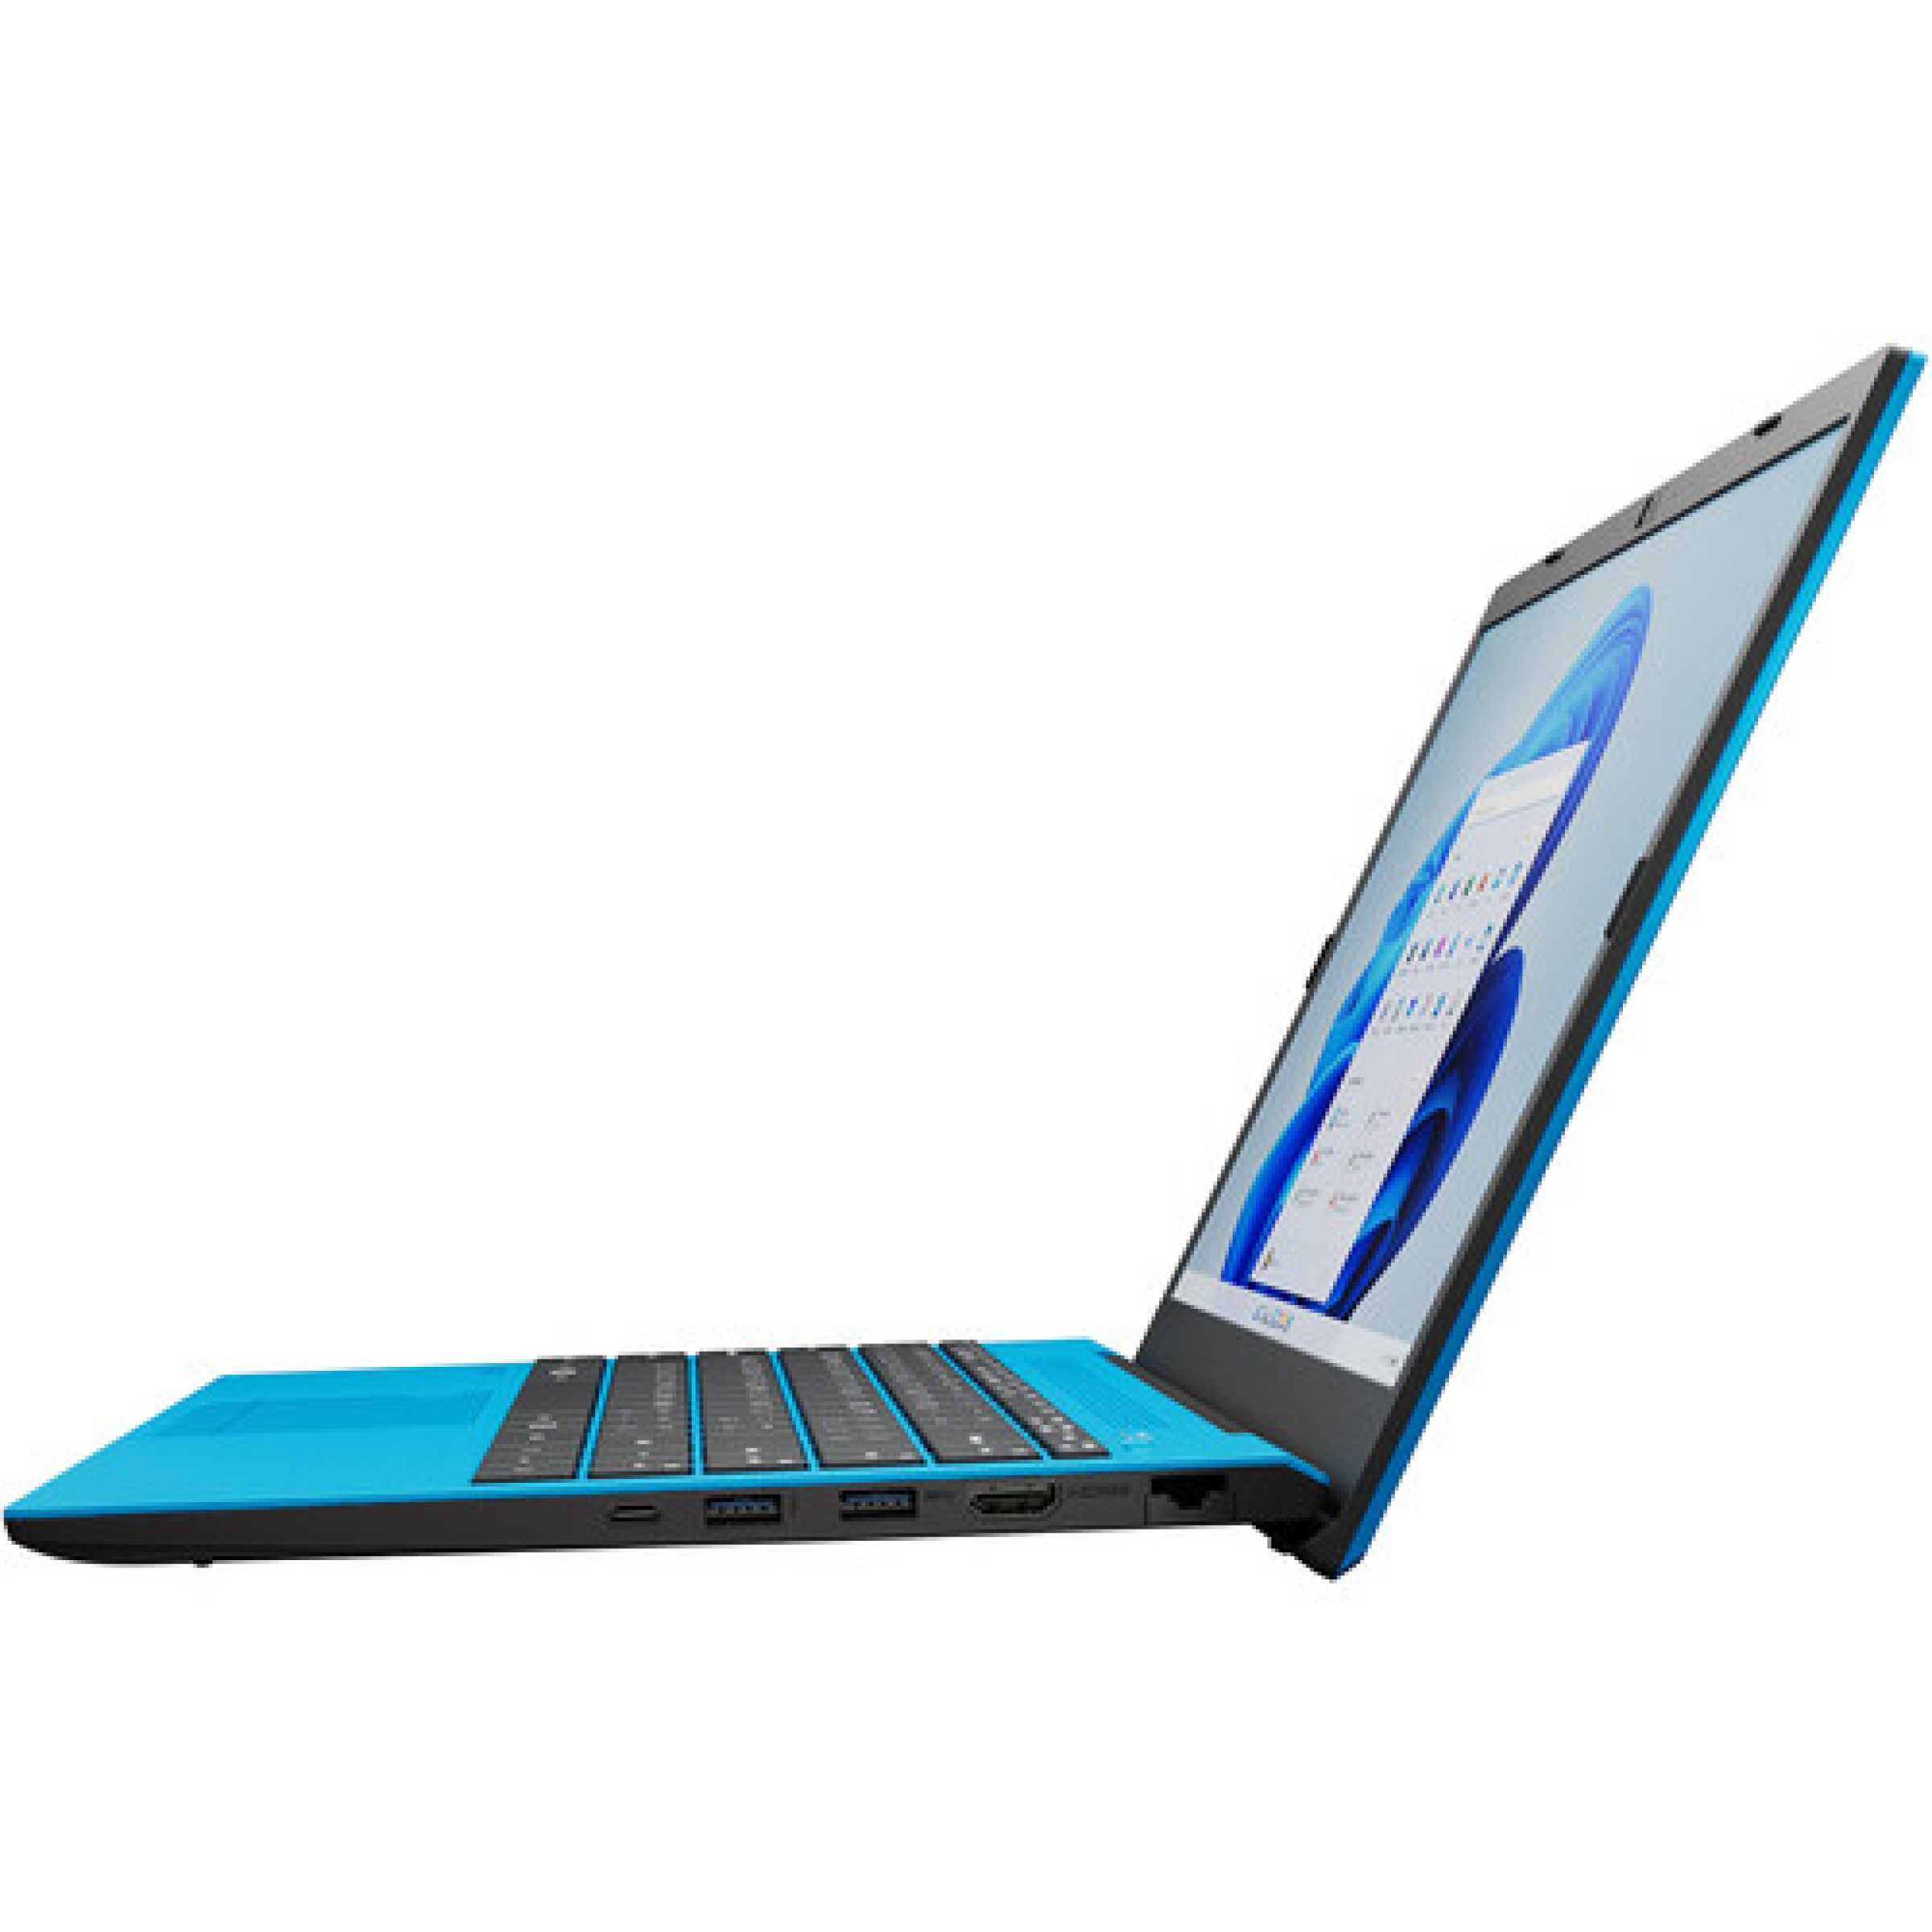 Laptop Vaio FE 14 VWNC51427-BL slide image 6